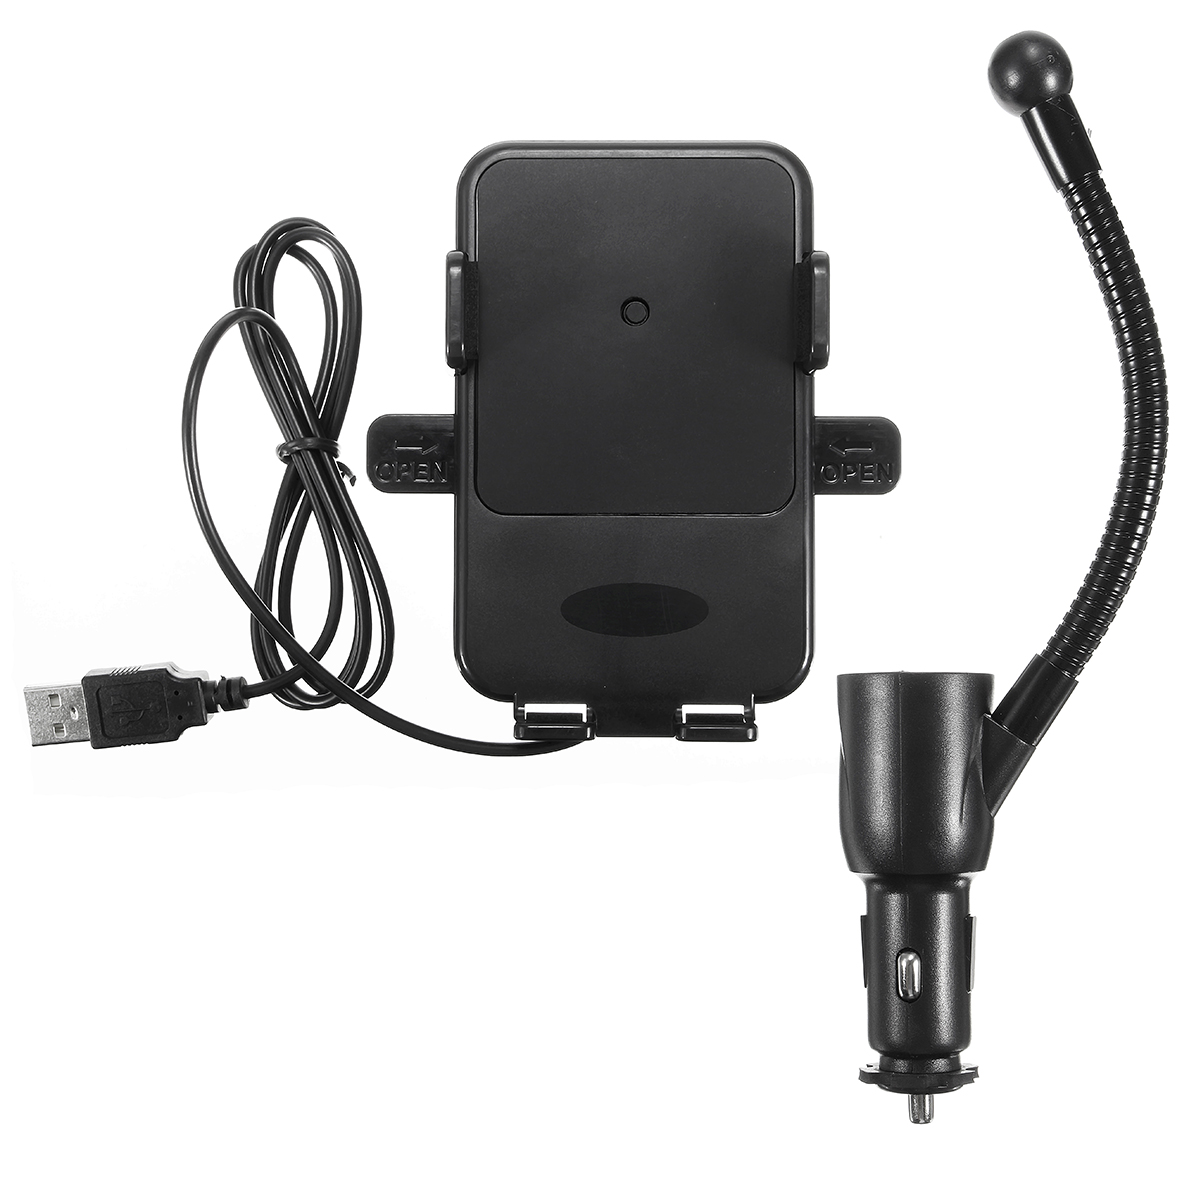 Qi Wireless Charger Dual USB Car Cig Arette Lighter Holder para I Phone Sam Sungder